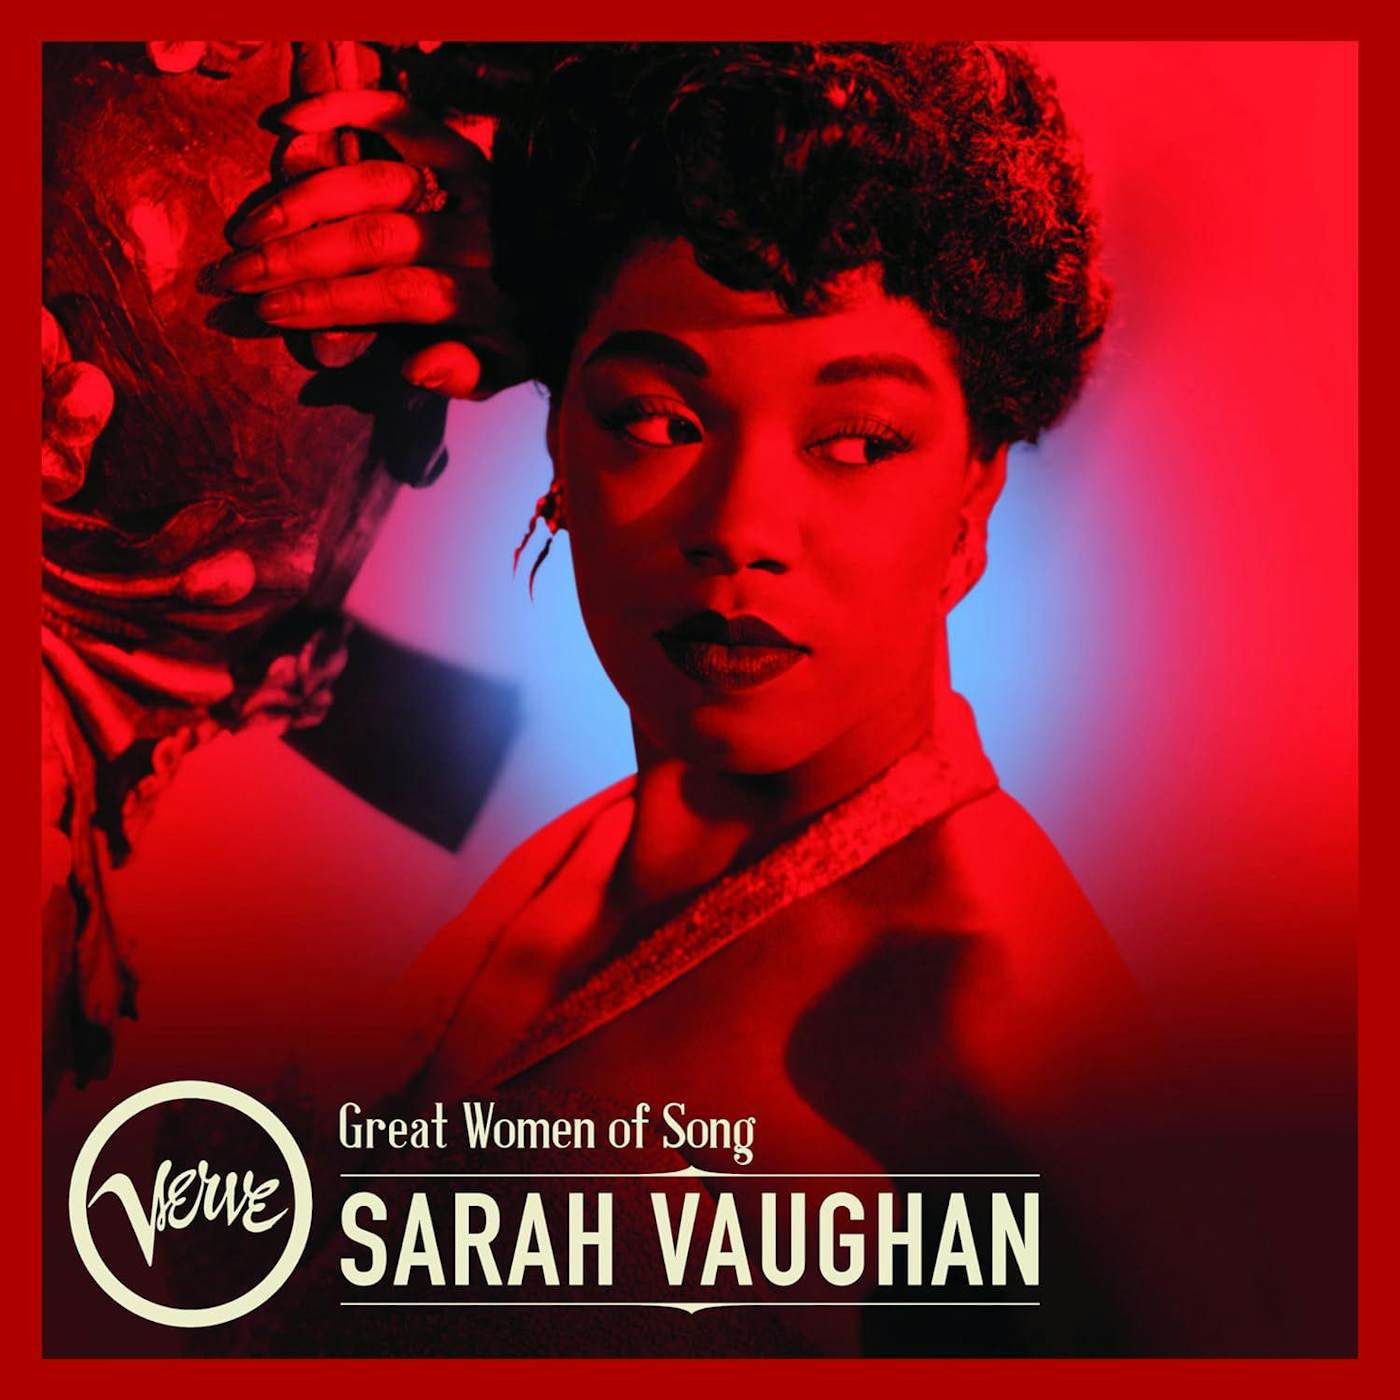 Great Women Of Song: Sarah Vaughan Vinyl Record